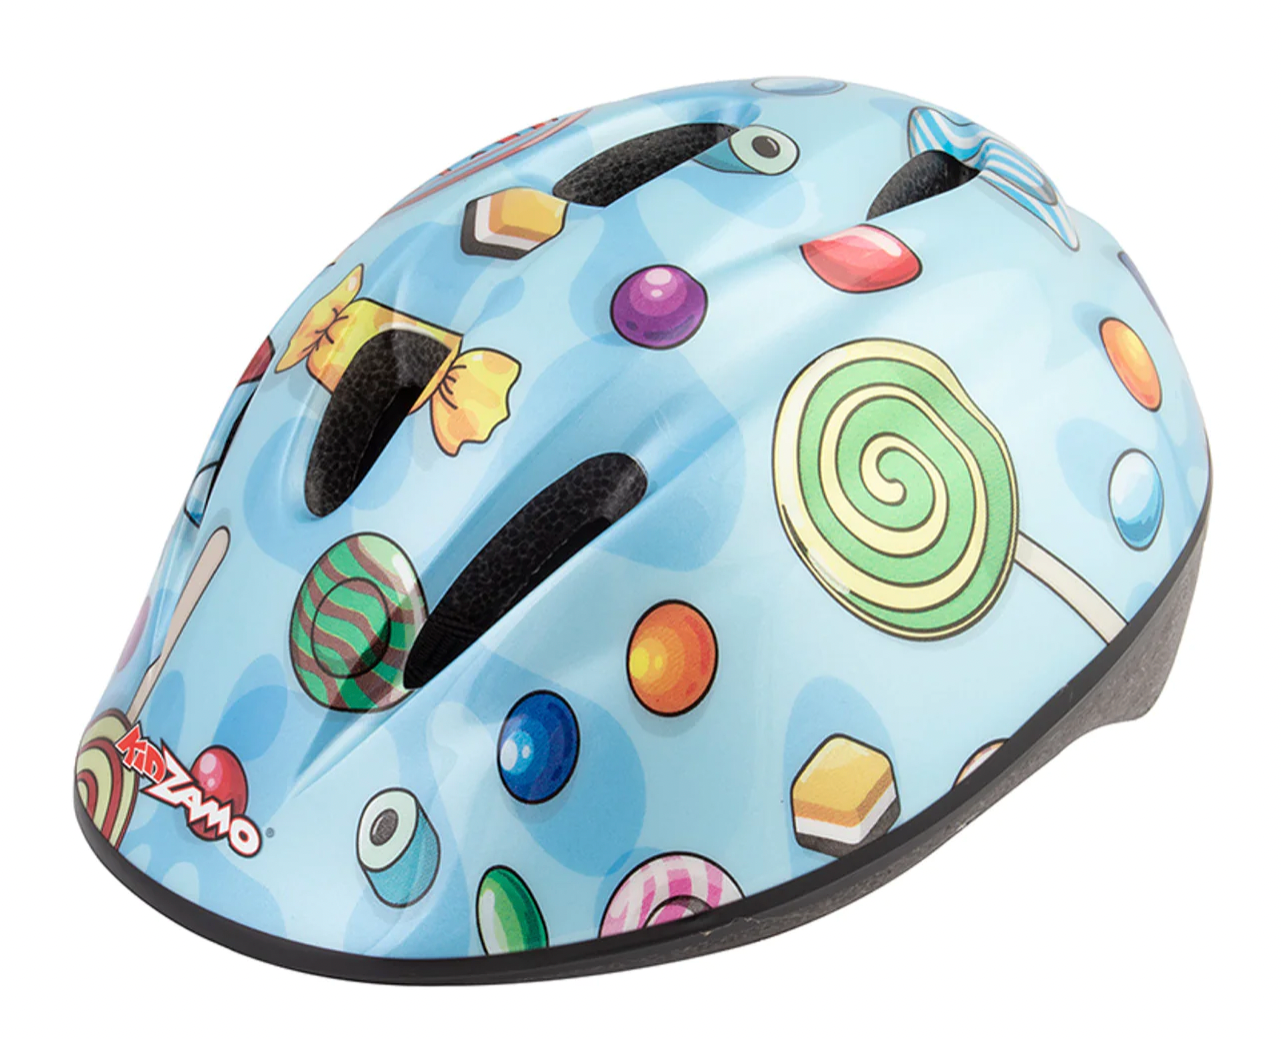 Kidzamo Candy Kids Bike Helmet